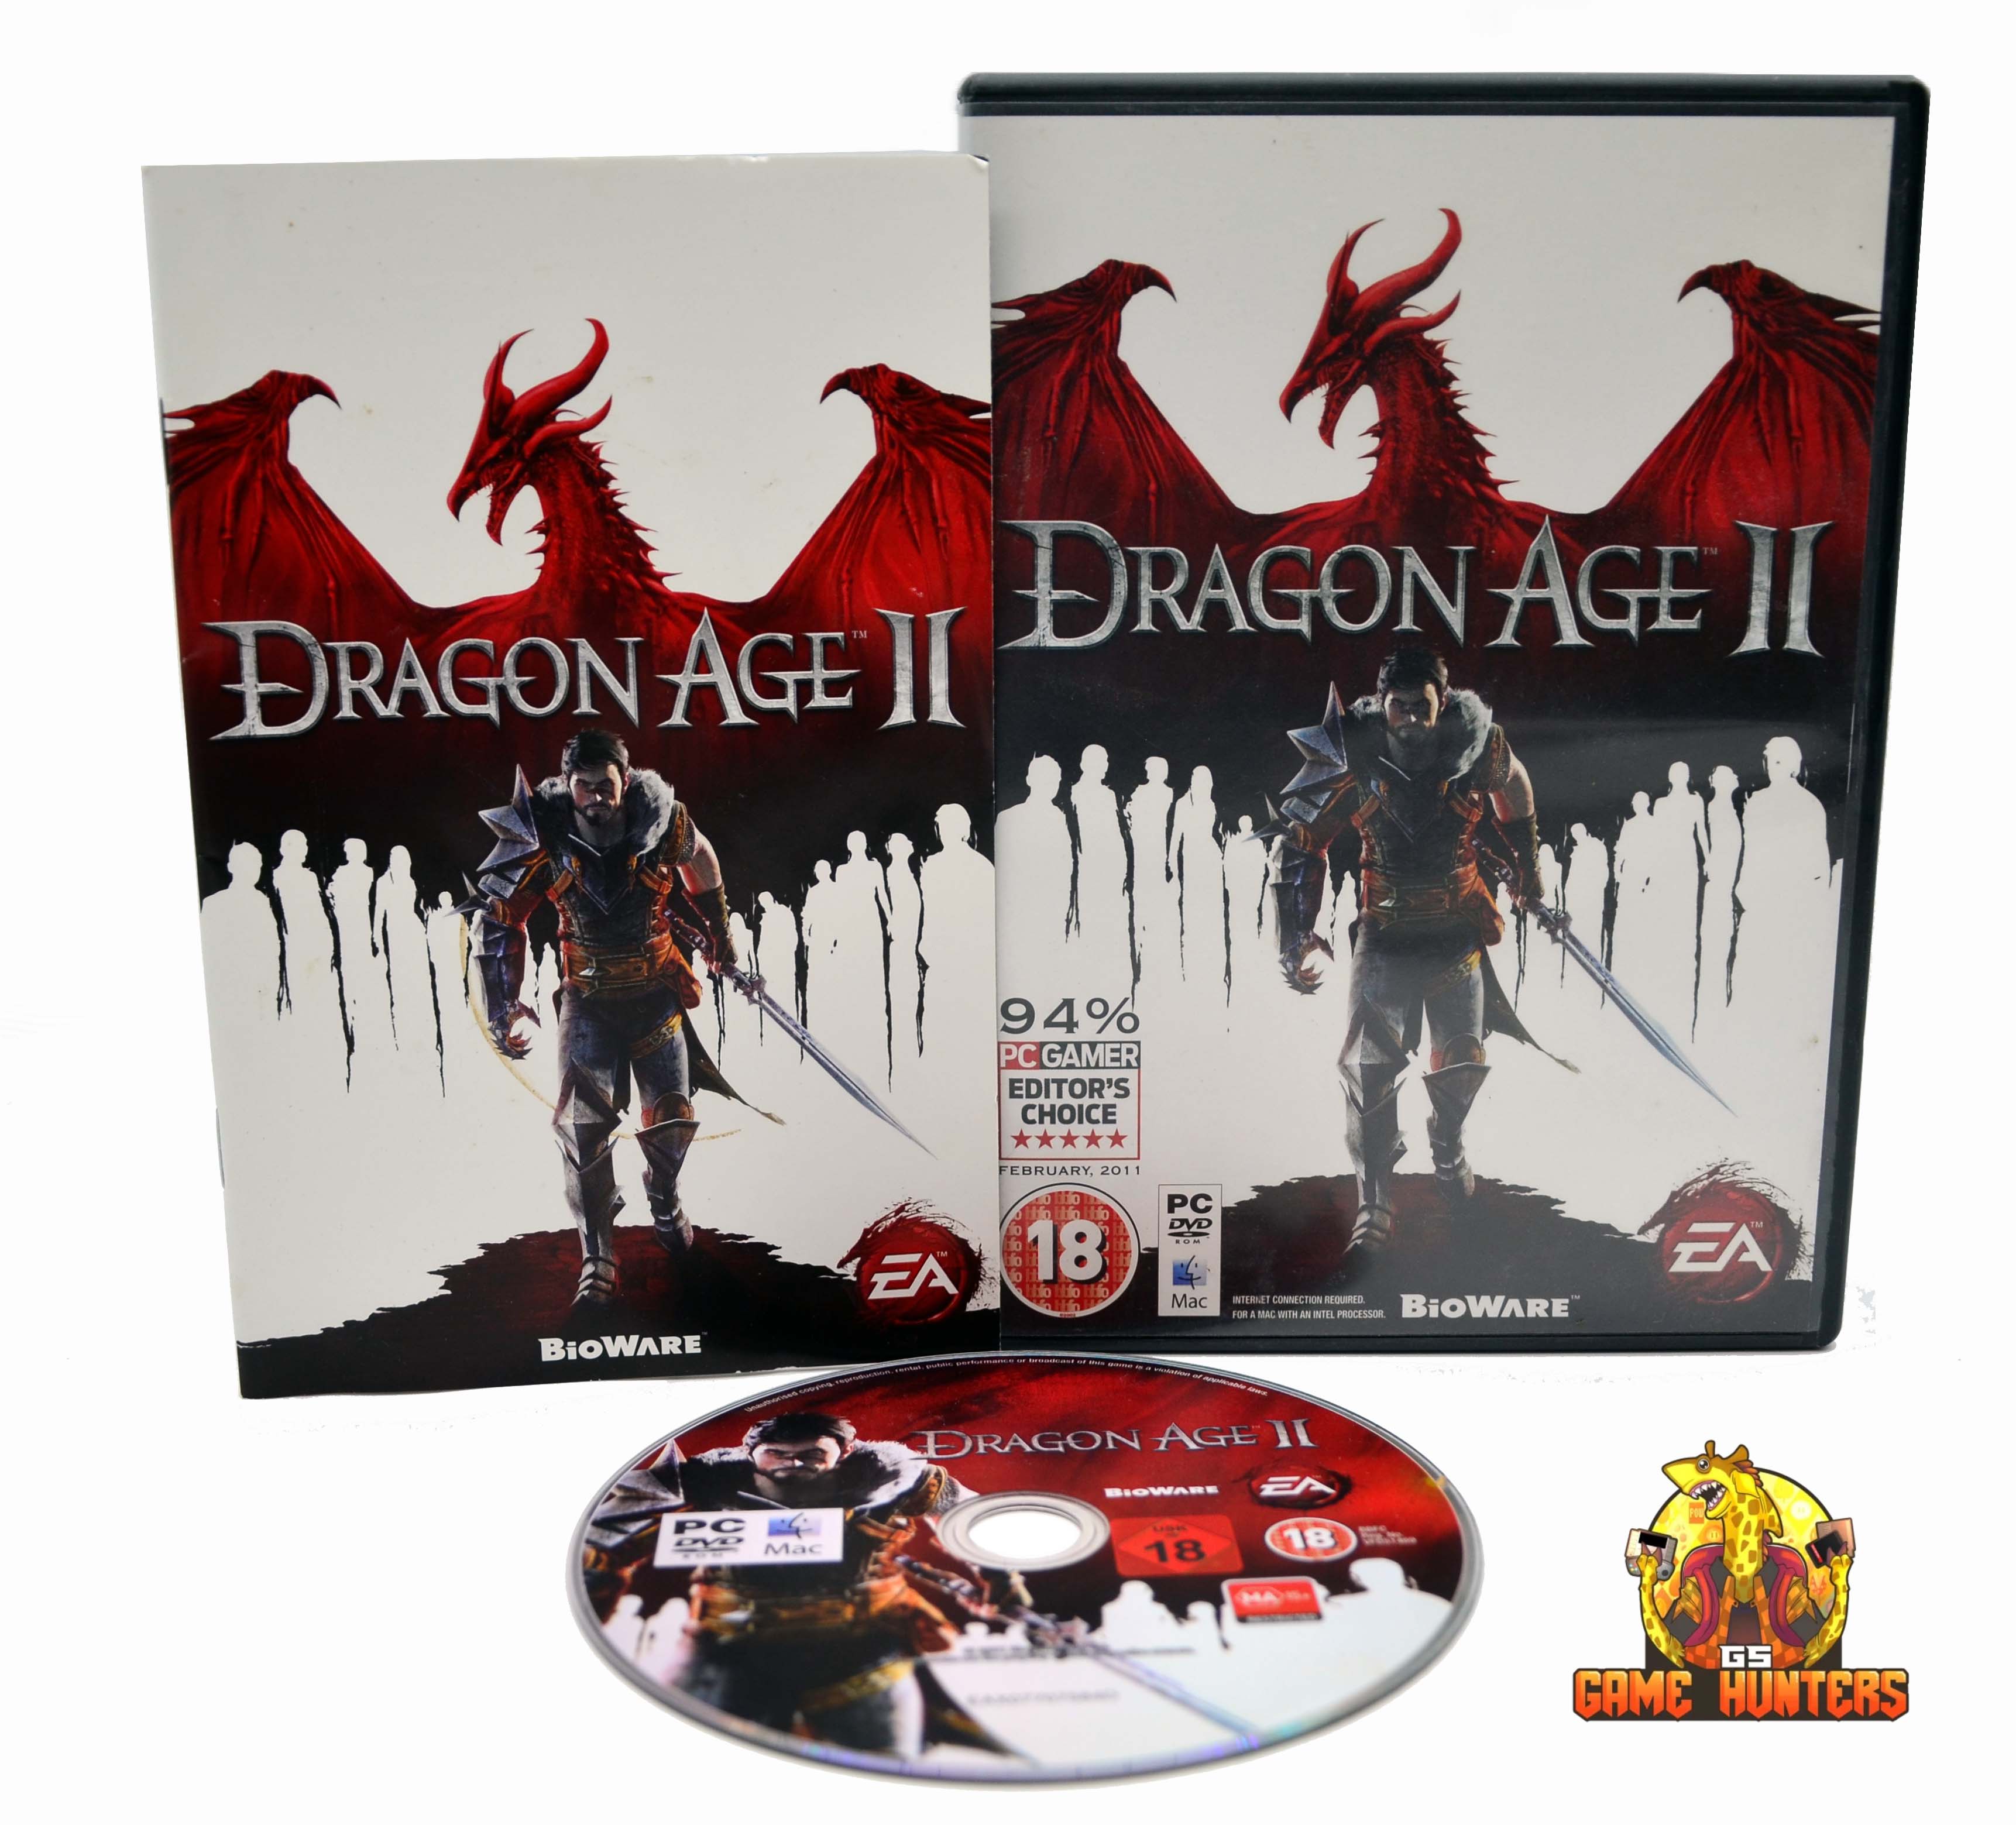 Dragon Age II Case, Manual & Disc.jpg  by GSGAMEHUNTERS